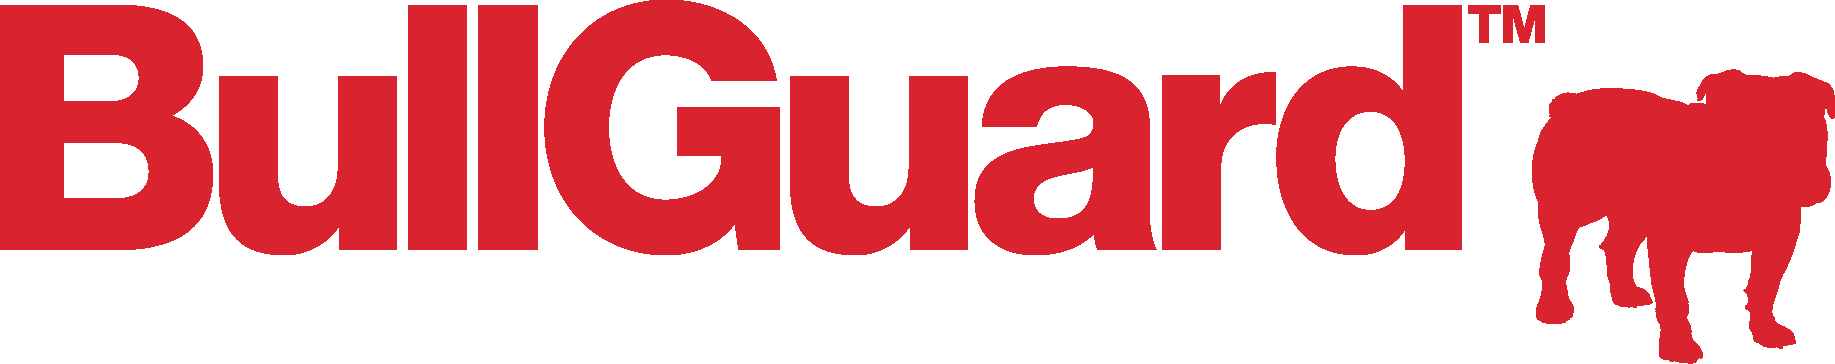 bullguard vpn officiella logotyp